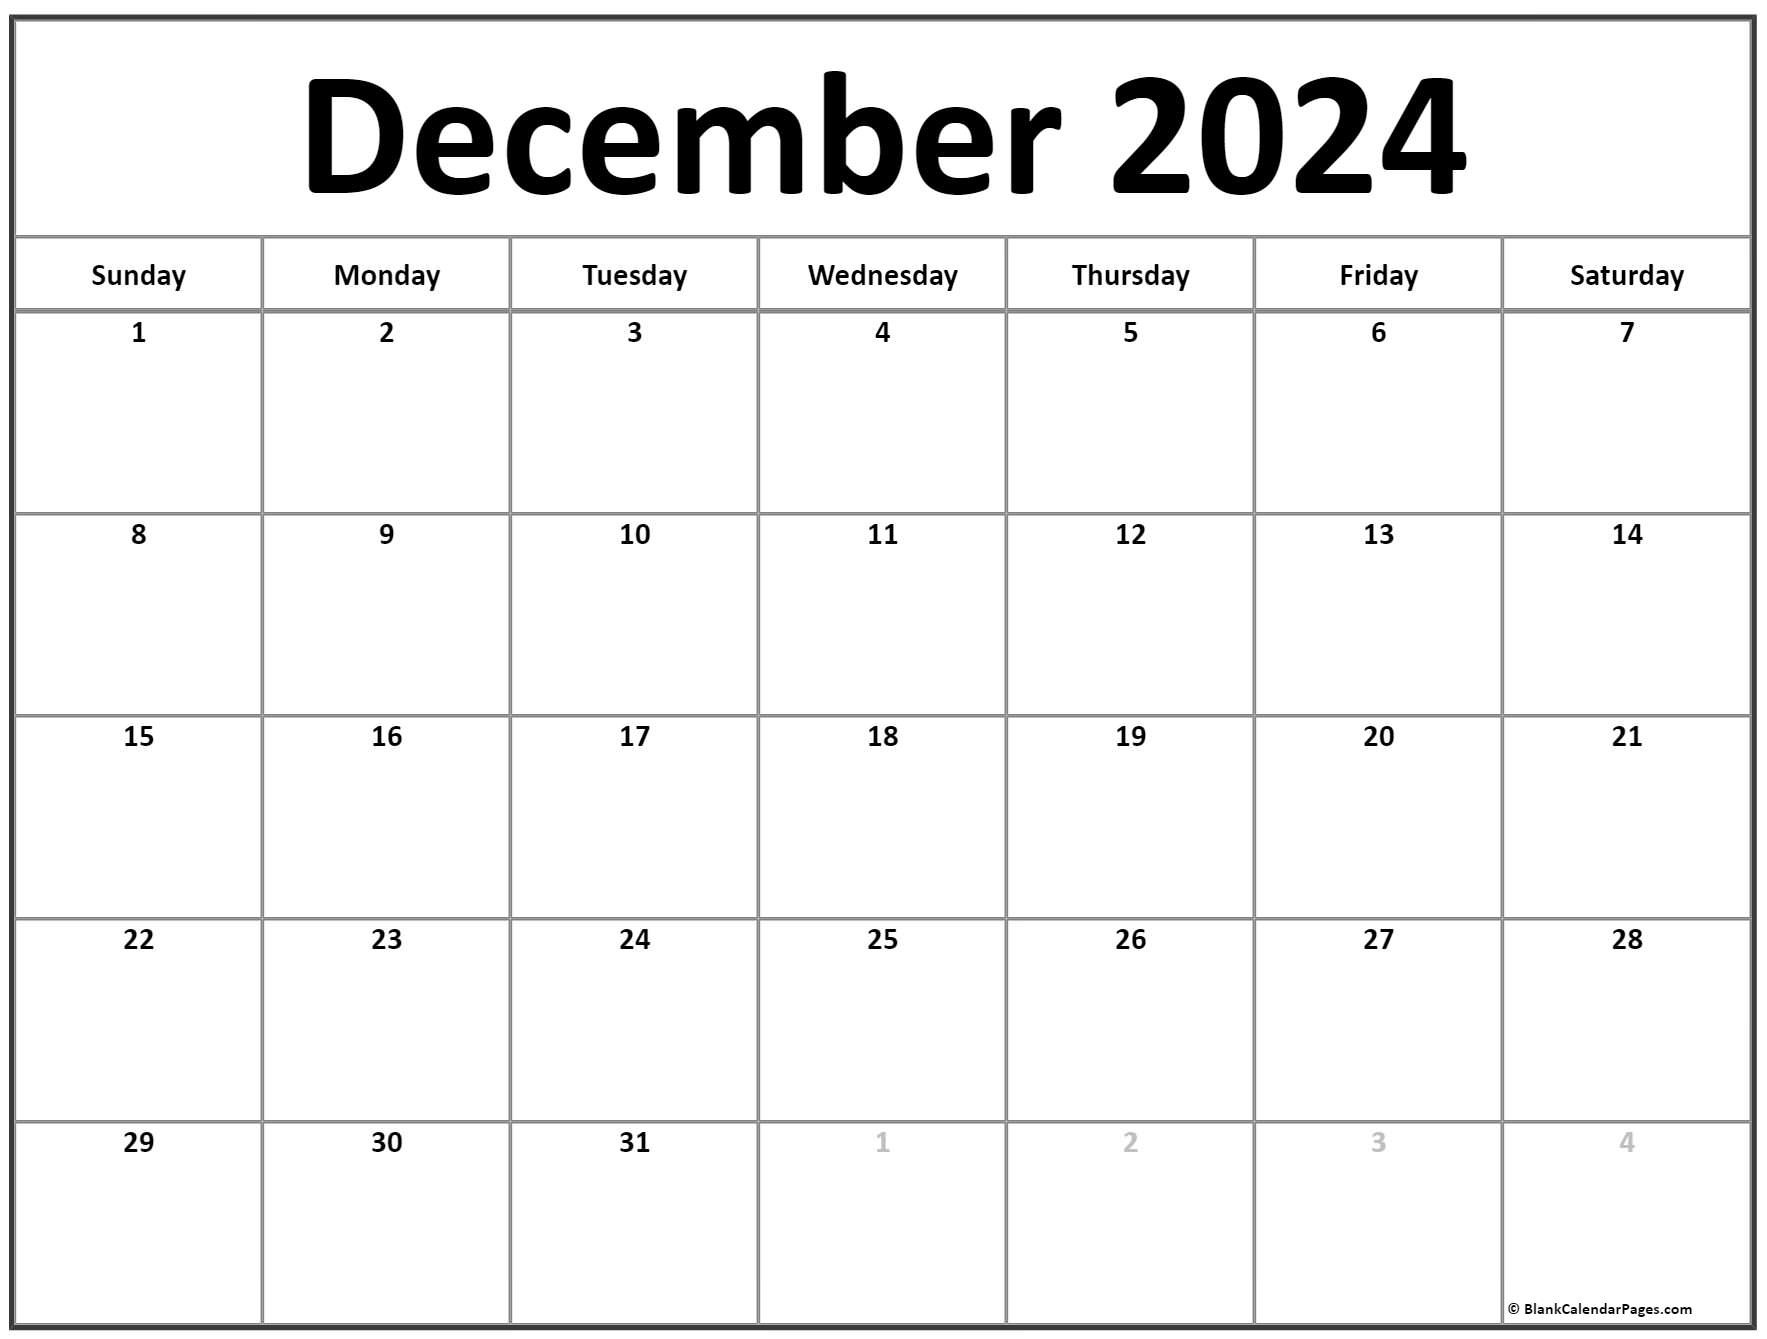 December 2024 Calendar Free Printable Calendar - Free Printable Blank Calendar September 2024